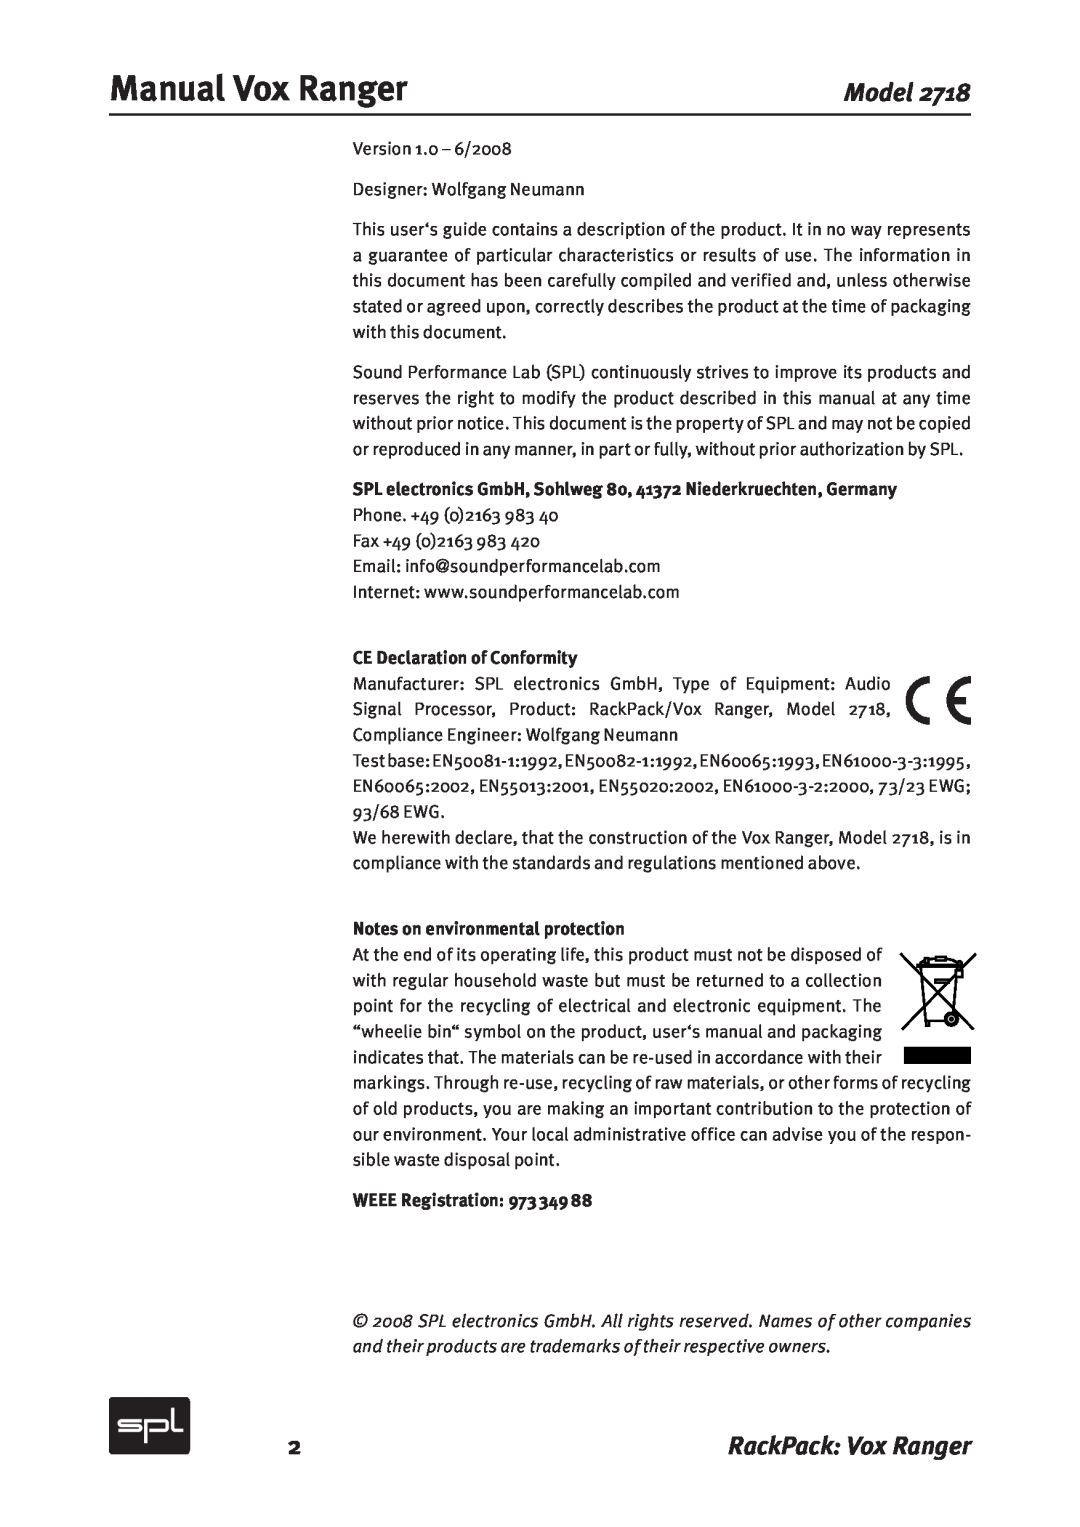 Sound Performance Lab 2718 manual Manual Vox Ranger, Model, RackPack Vox Ranger, CE Declaration of Conformity 